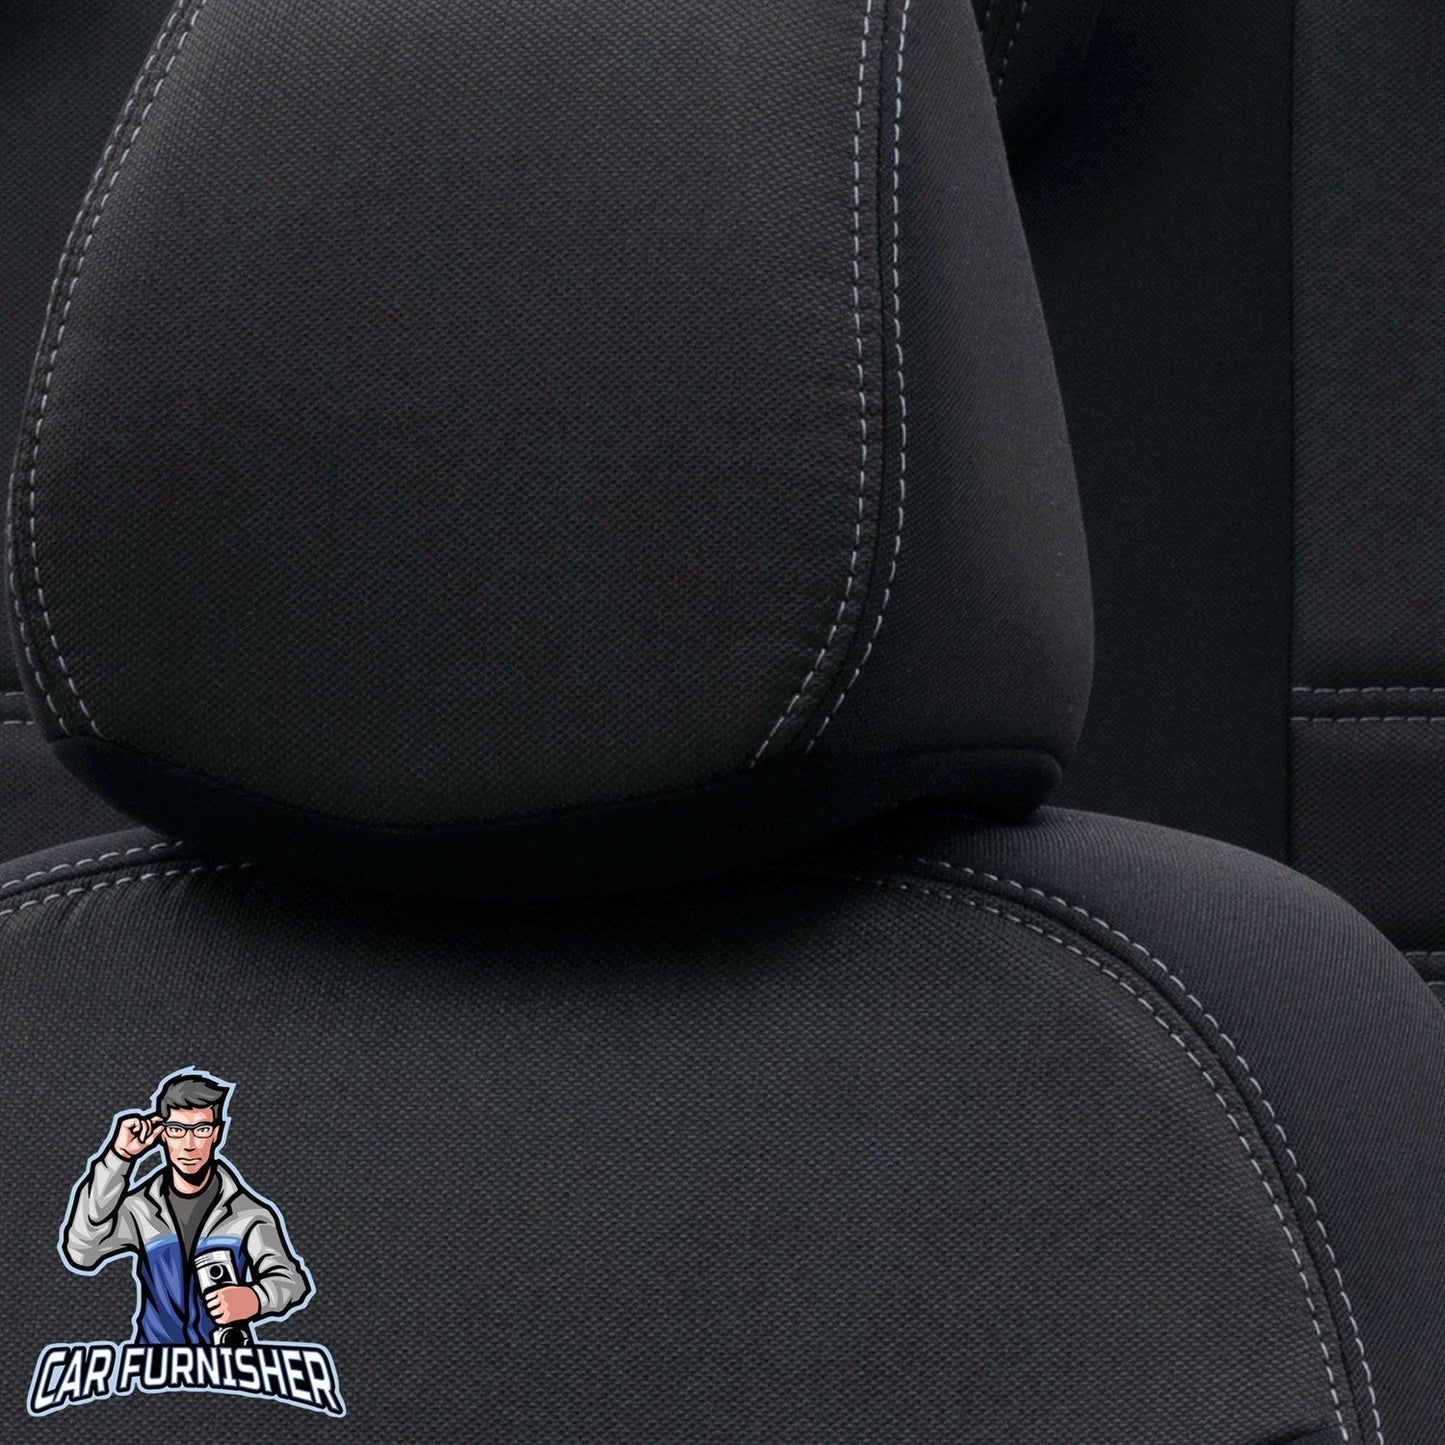 Fiat Fiorino Seat Covers Original Jacquard Design Black Jacquard Fabric